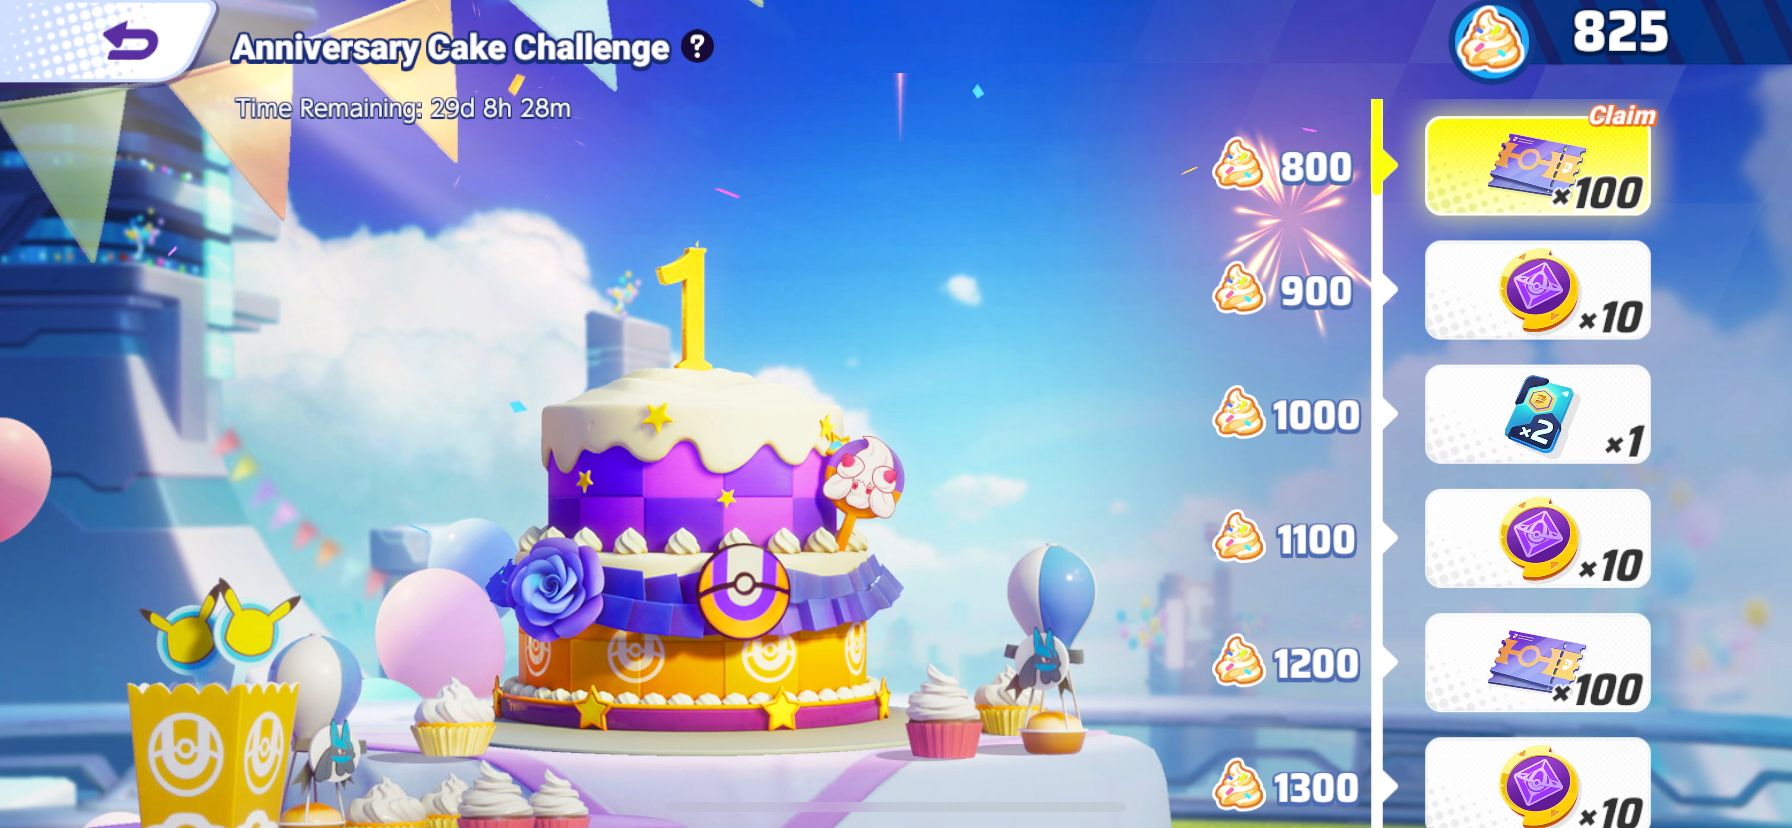 Anniversary Cake Challenge rewards page from Pokemon Unite